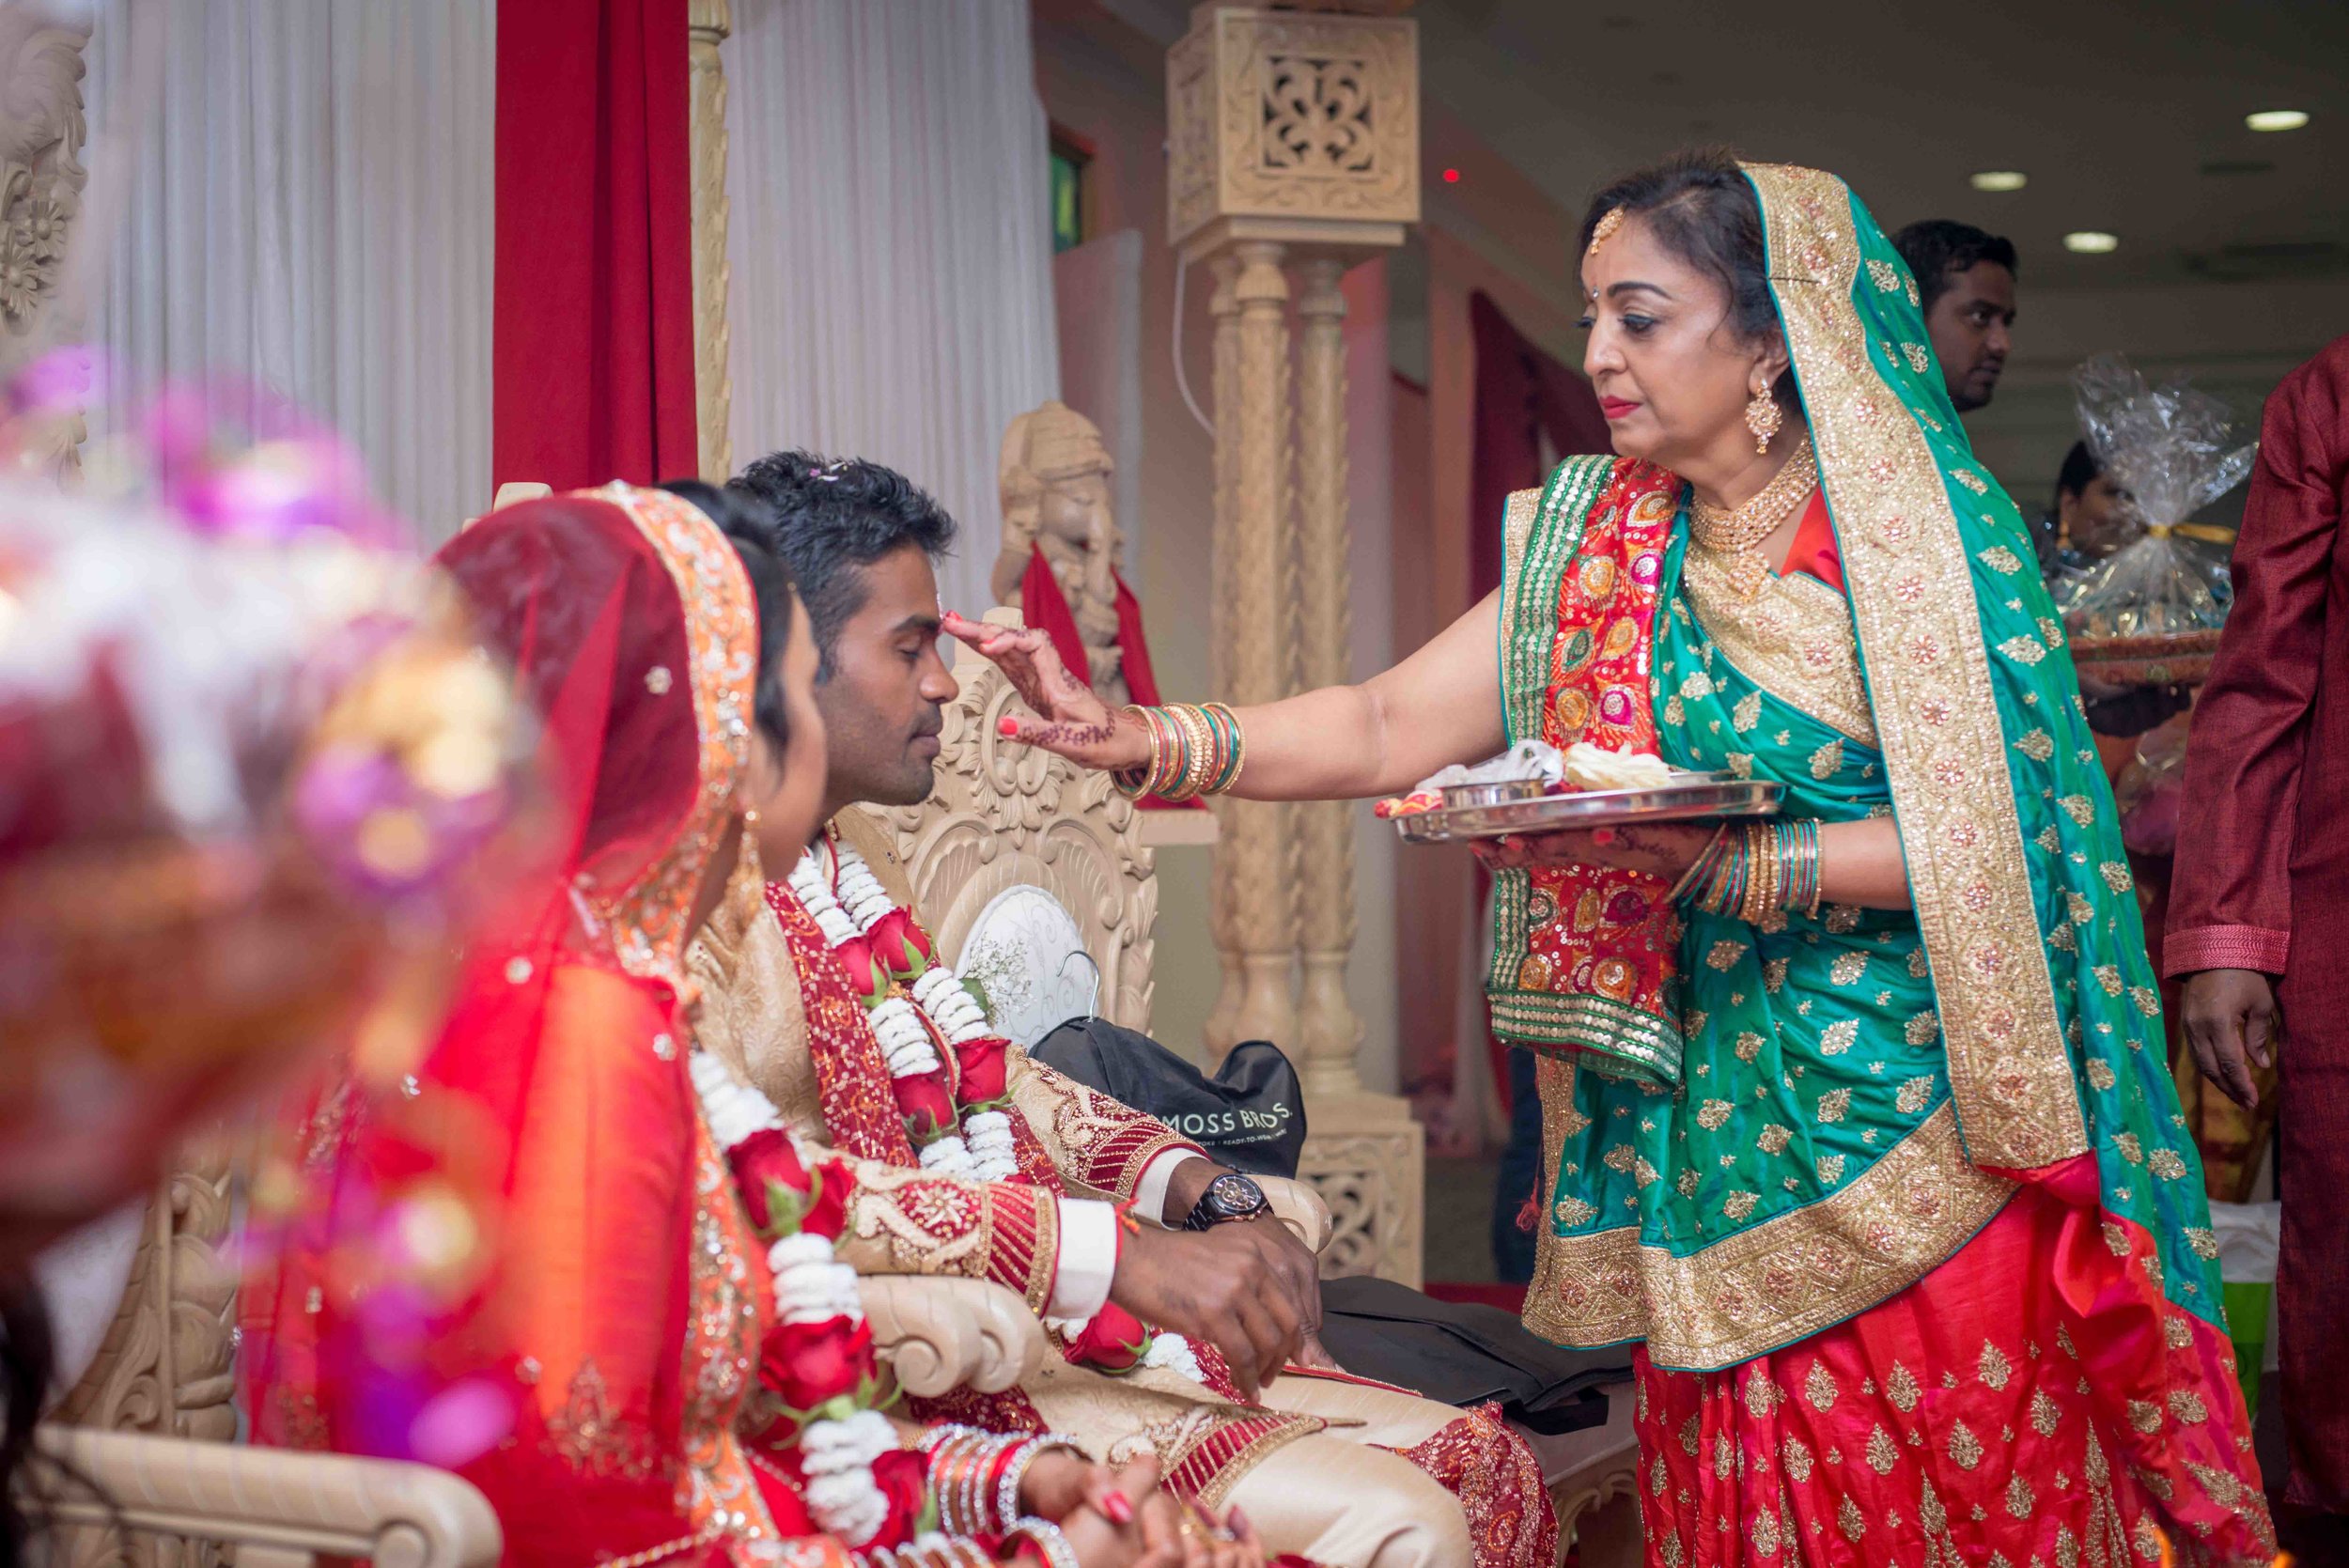 premier-banquetting-london-Hindu-asian-wedding-photographer-natalia-smith-photography-35.jpg